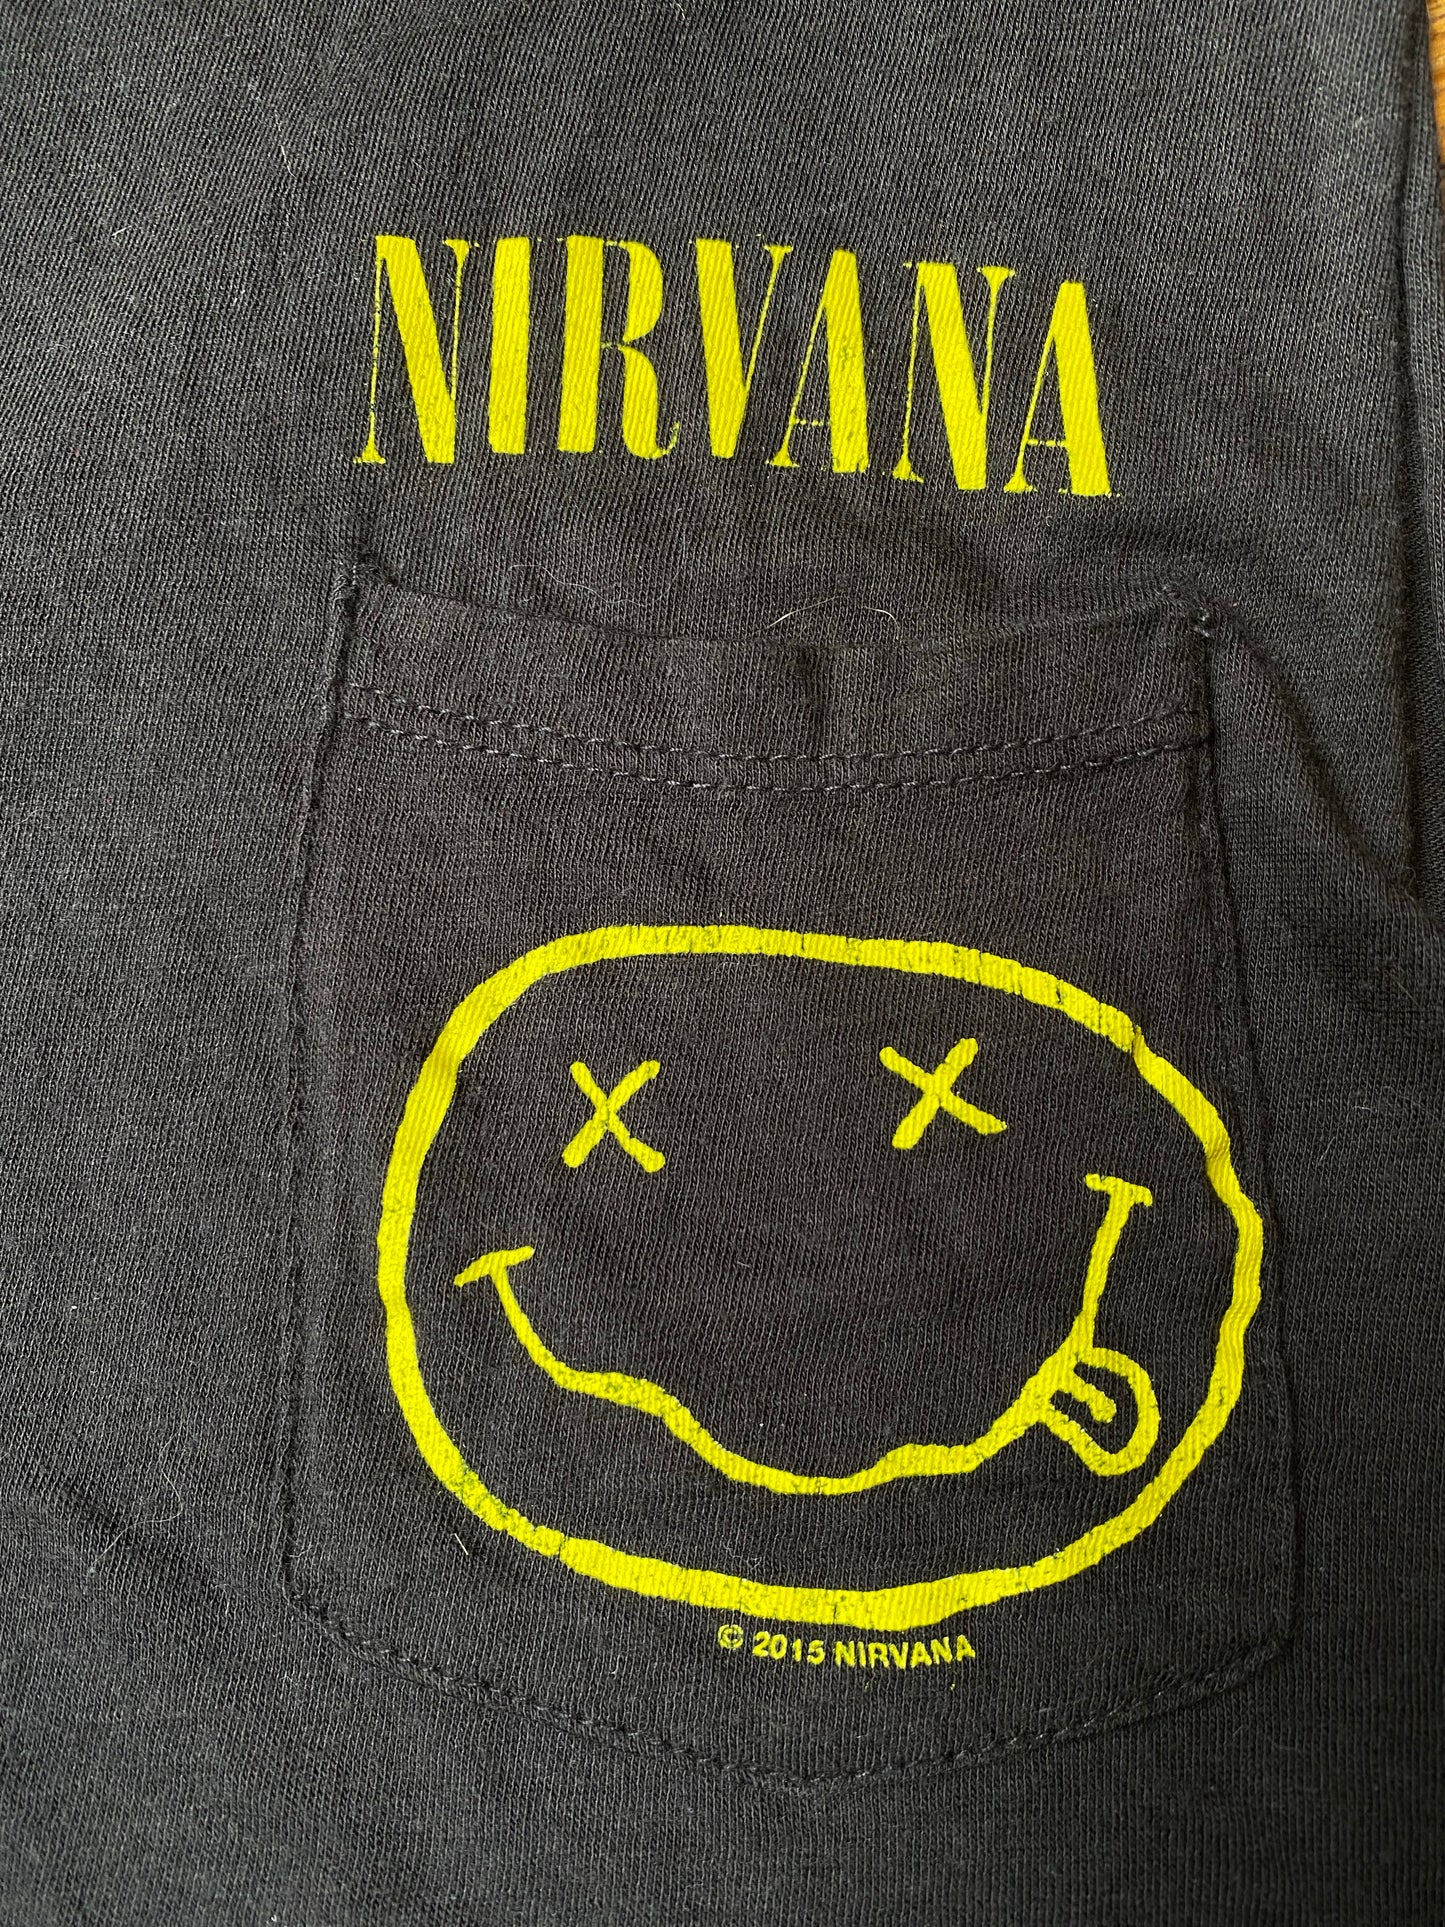 Official 2015 Nirvana Smiley Face Sleeveless T-Shirt